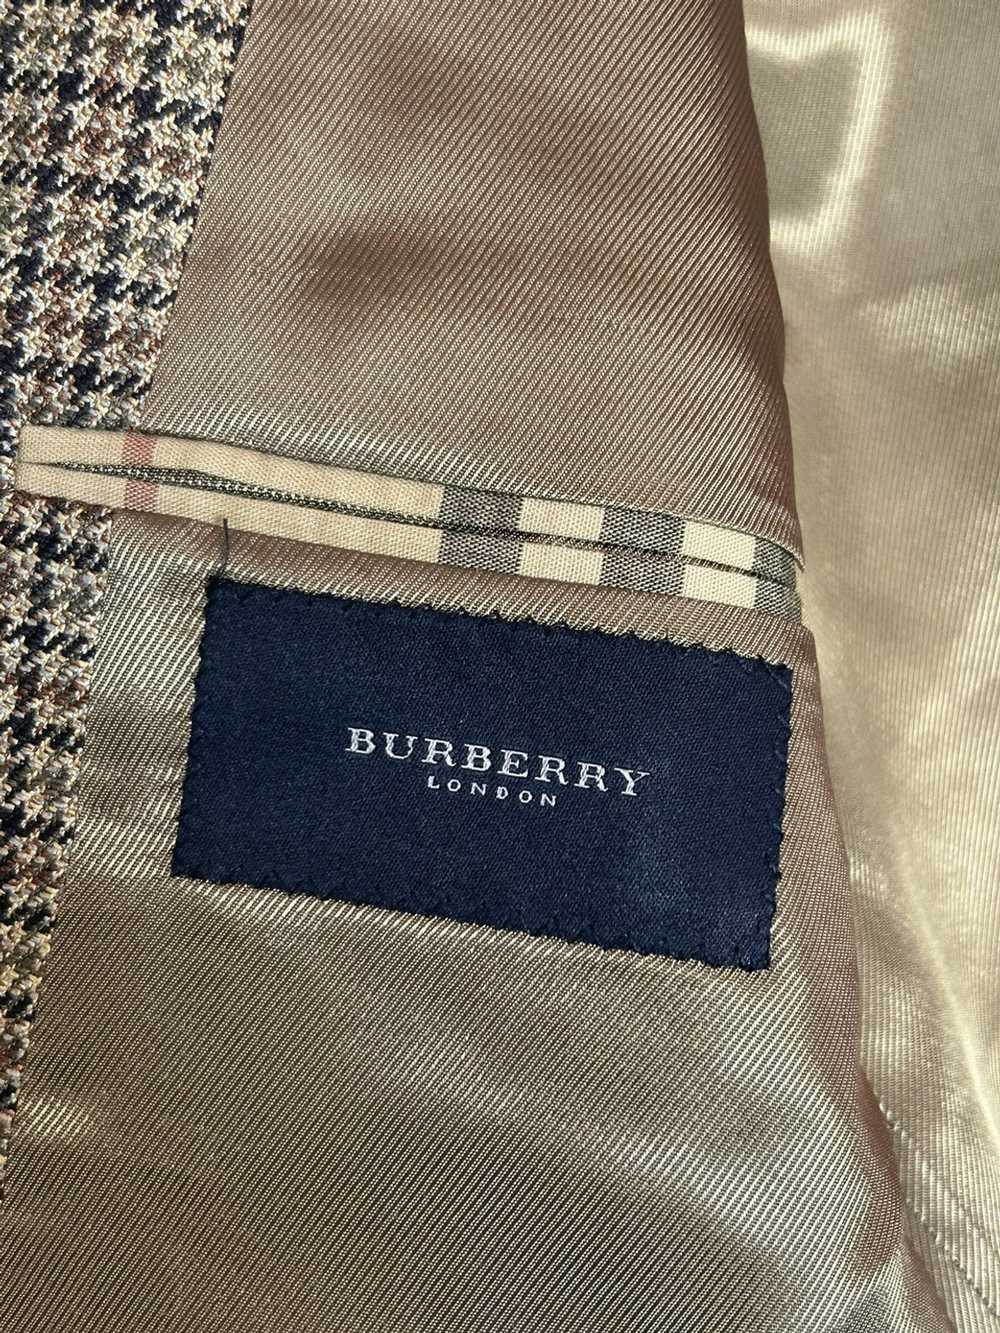 Burberry Burberry Houndstooth Bond Street Suit Ja… - image 2